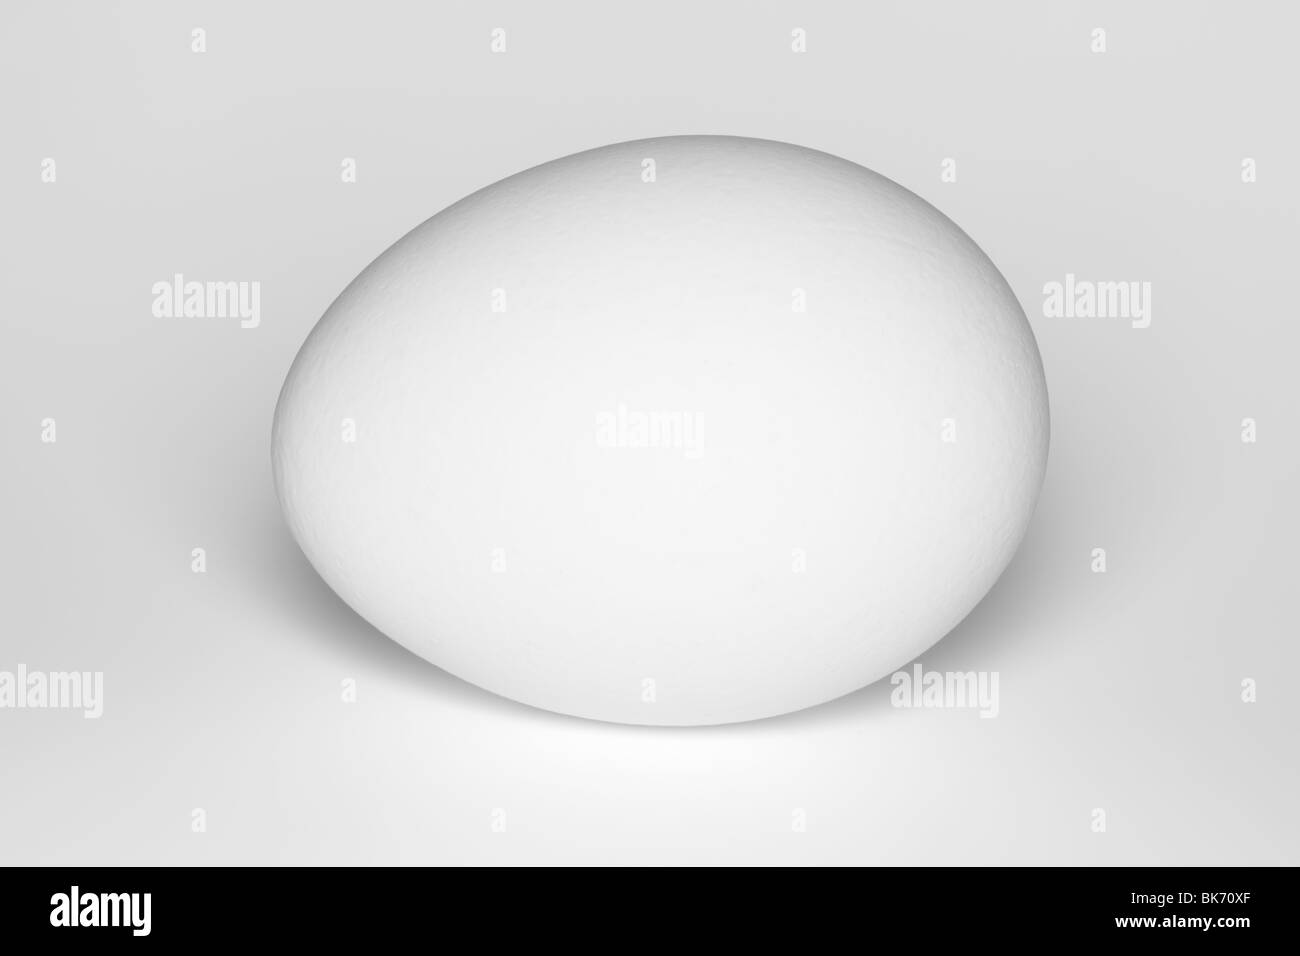 White chicken egg on a white background. Stock Photo